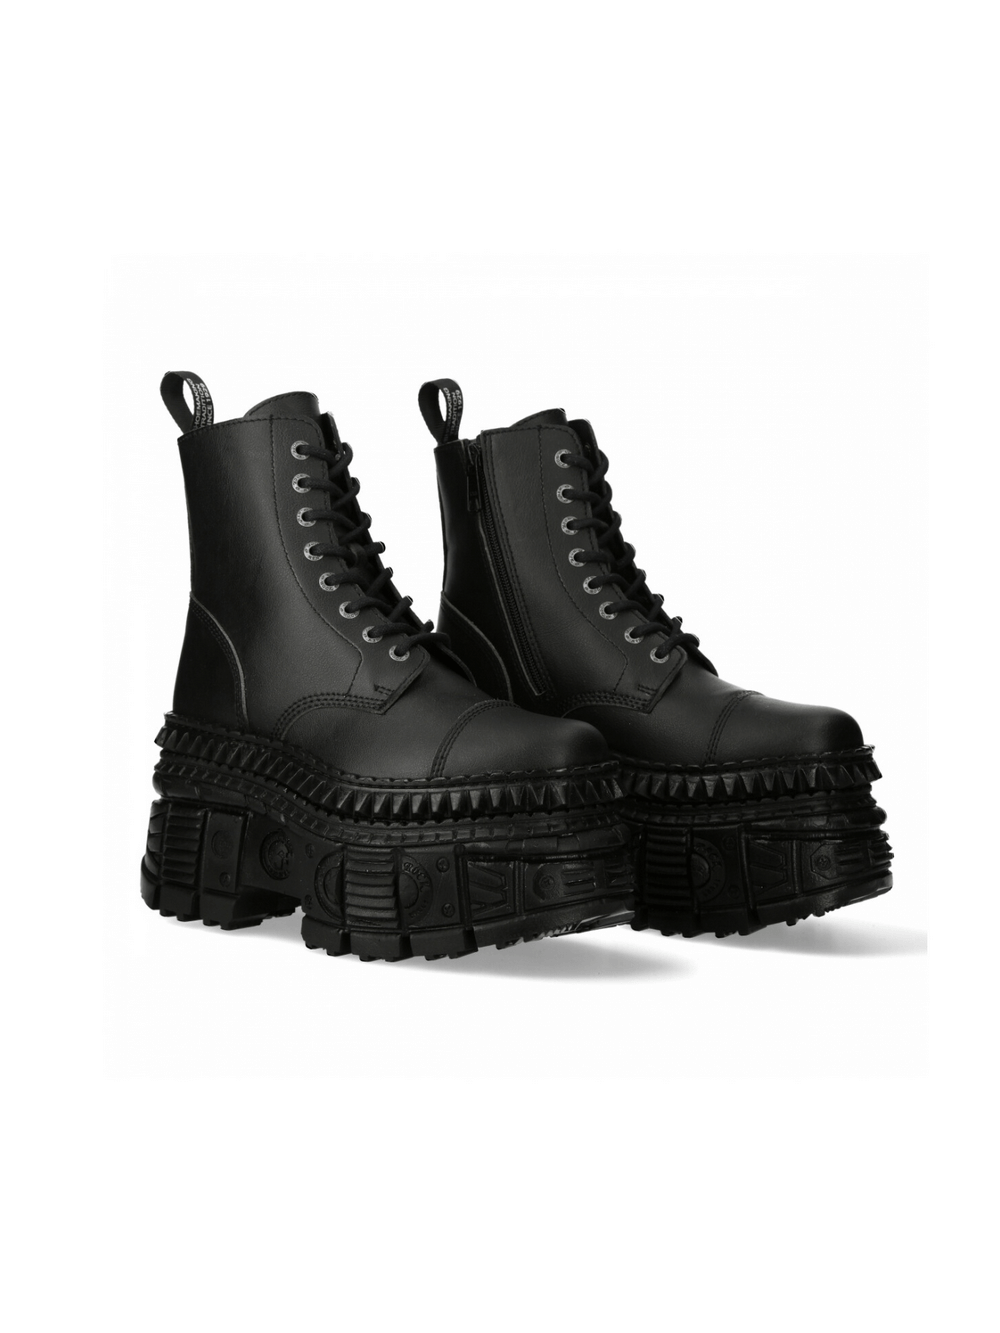 NEW ROCK Fashion Black Gothic Style Unisex Ankle Boots